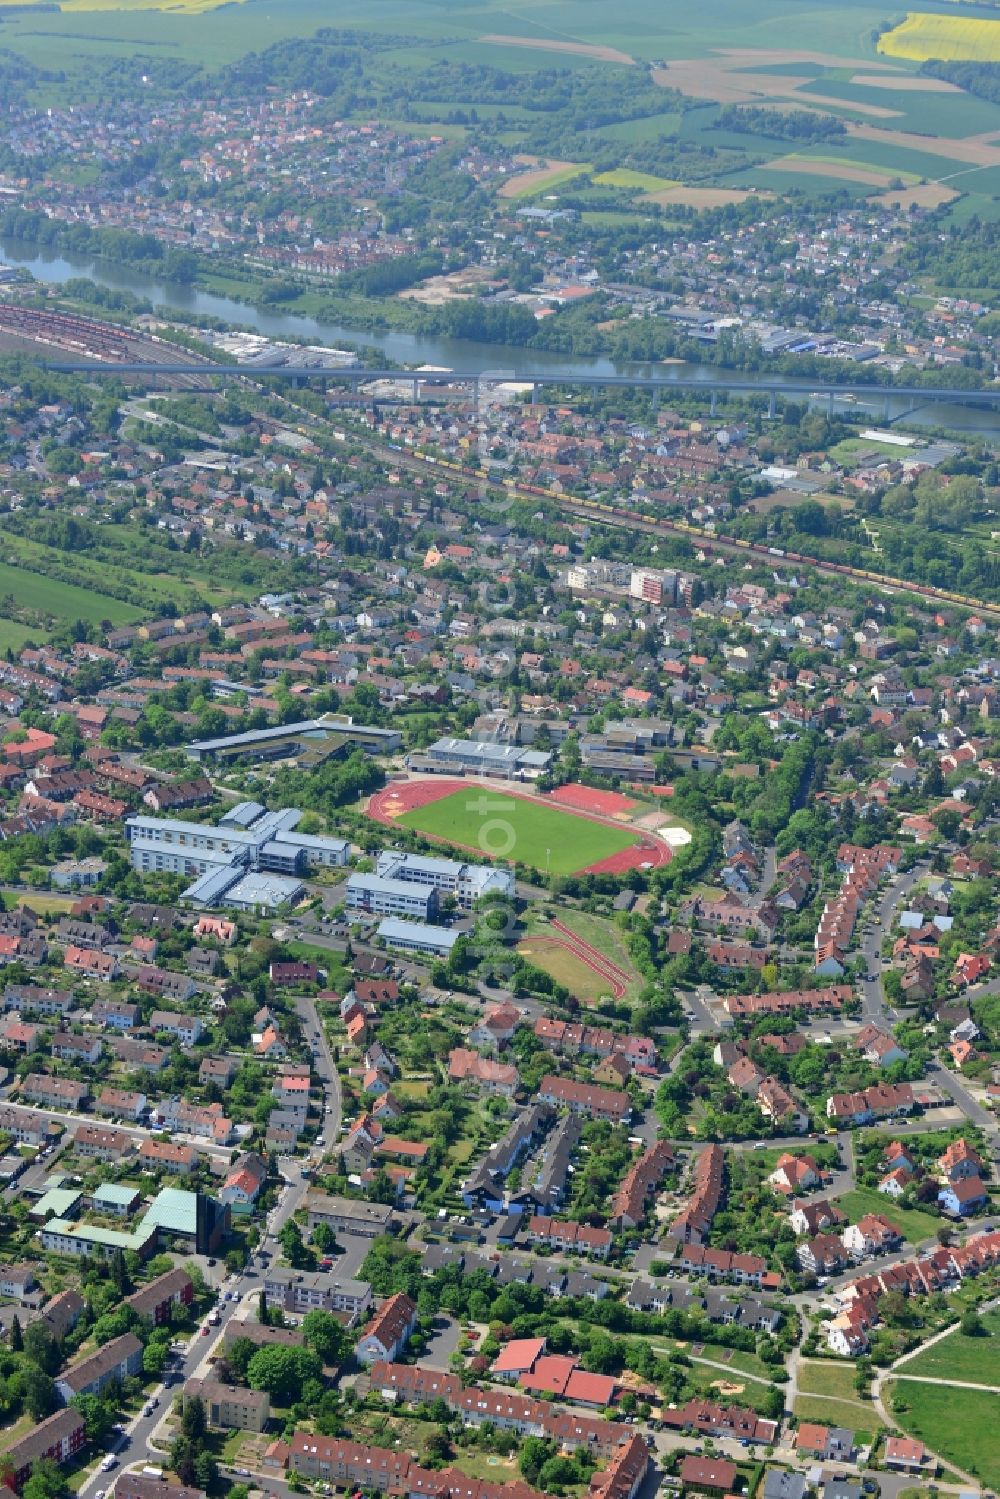 Aerial photograph Veitshöchheim - Sports facility grounds of the Arena stadium in Veitshoechheim in the state Bavaria